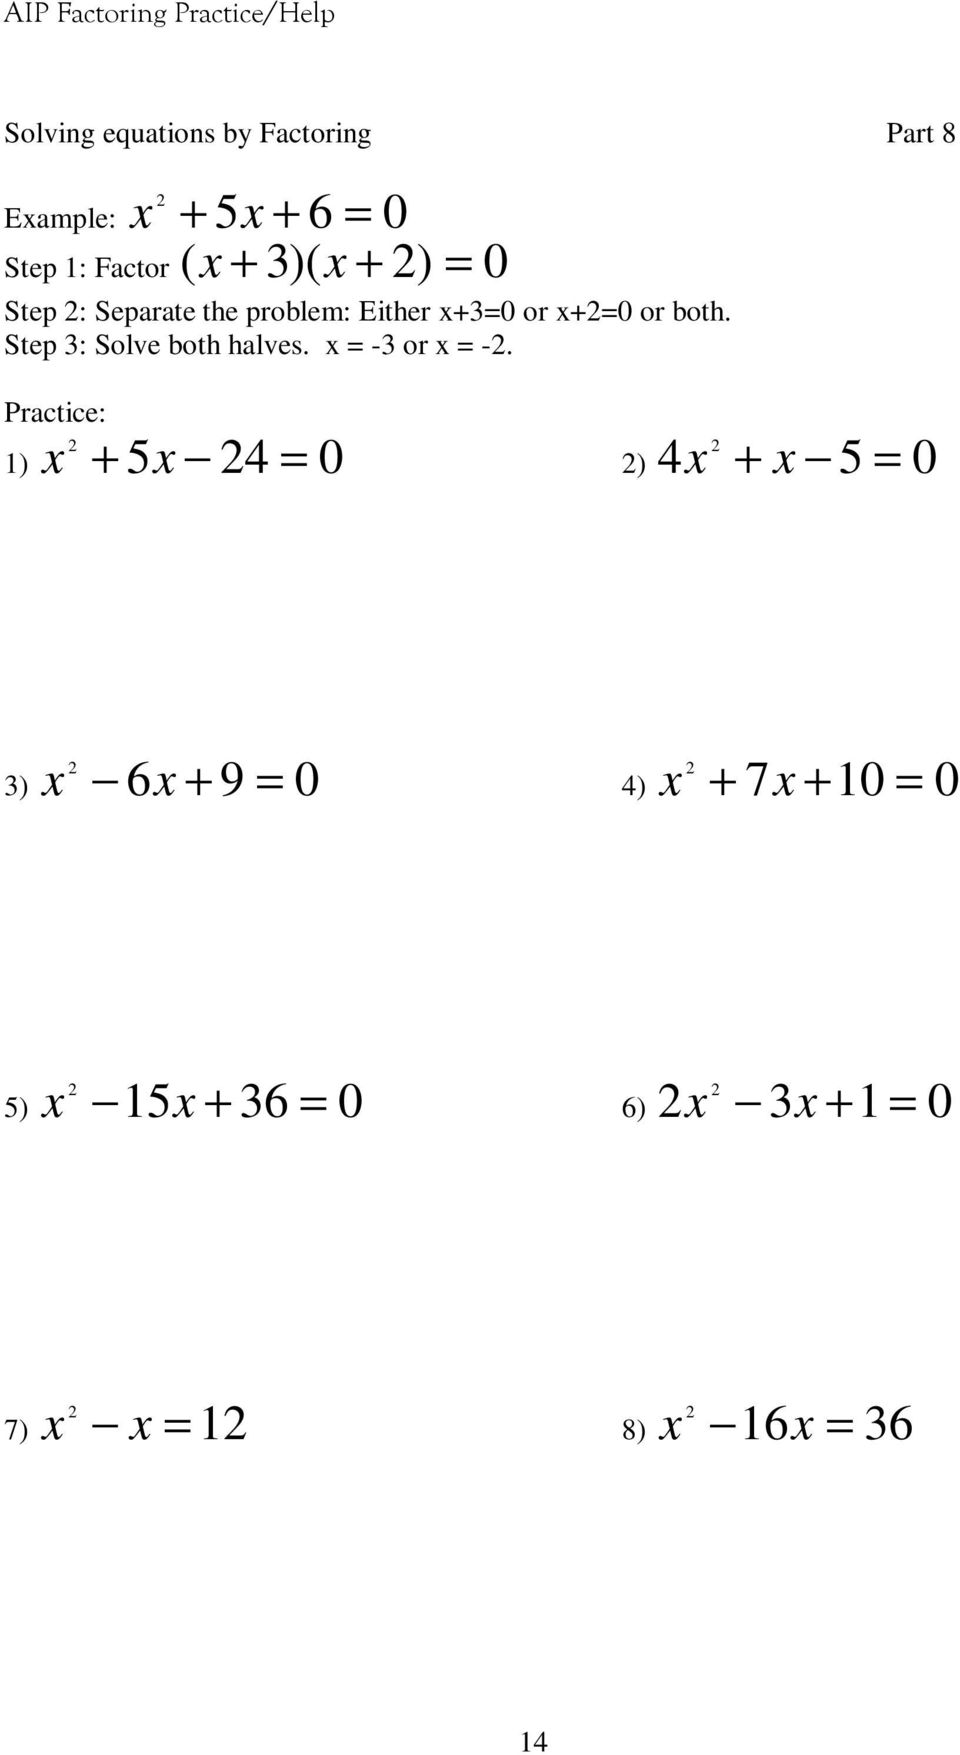 Step : Solve both halves. x = - or x = -.